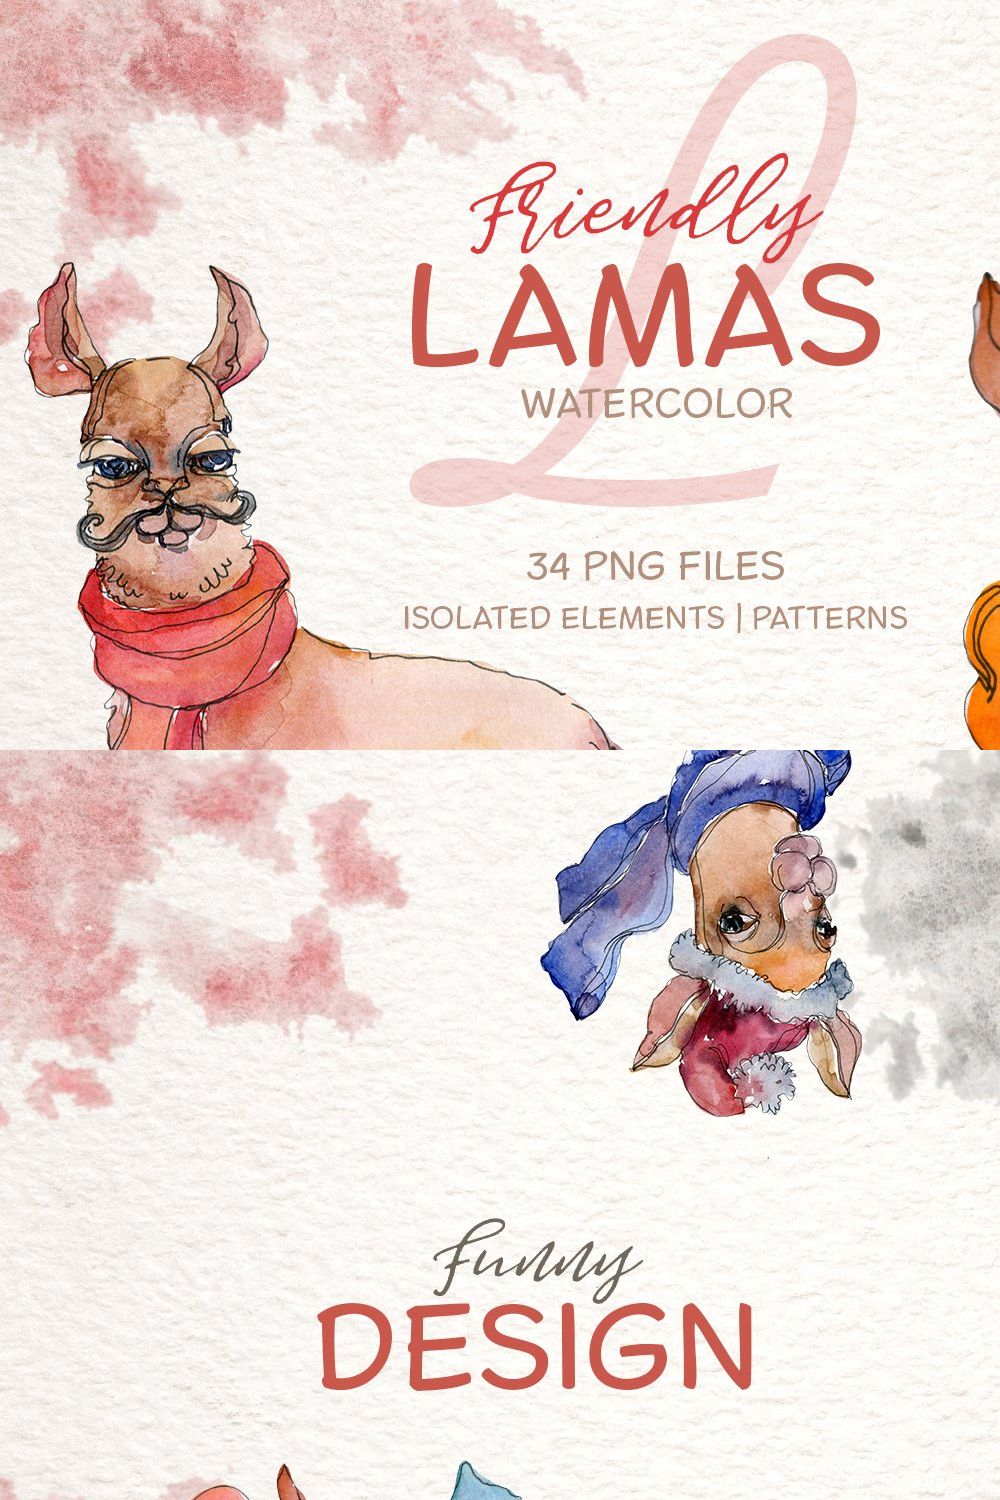 Watercolor llama clipart pinterest preview image.